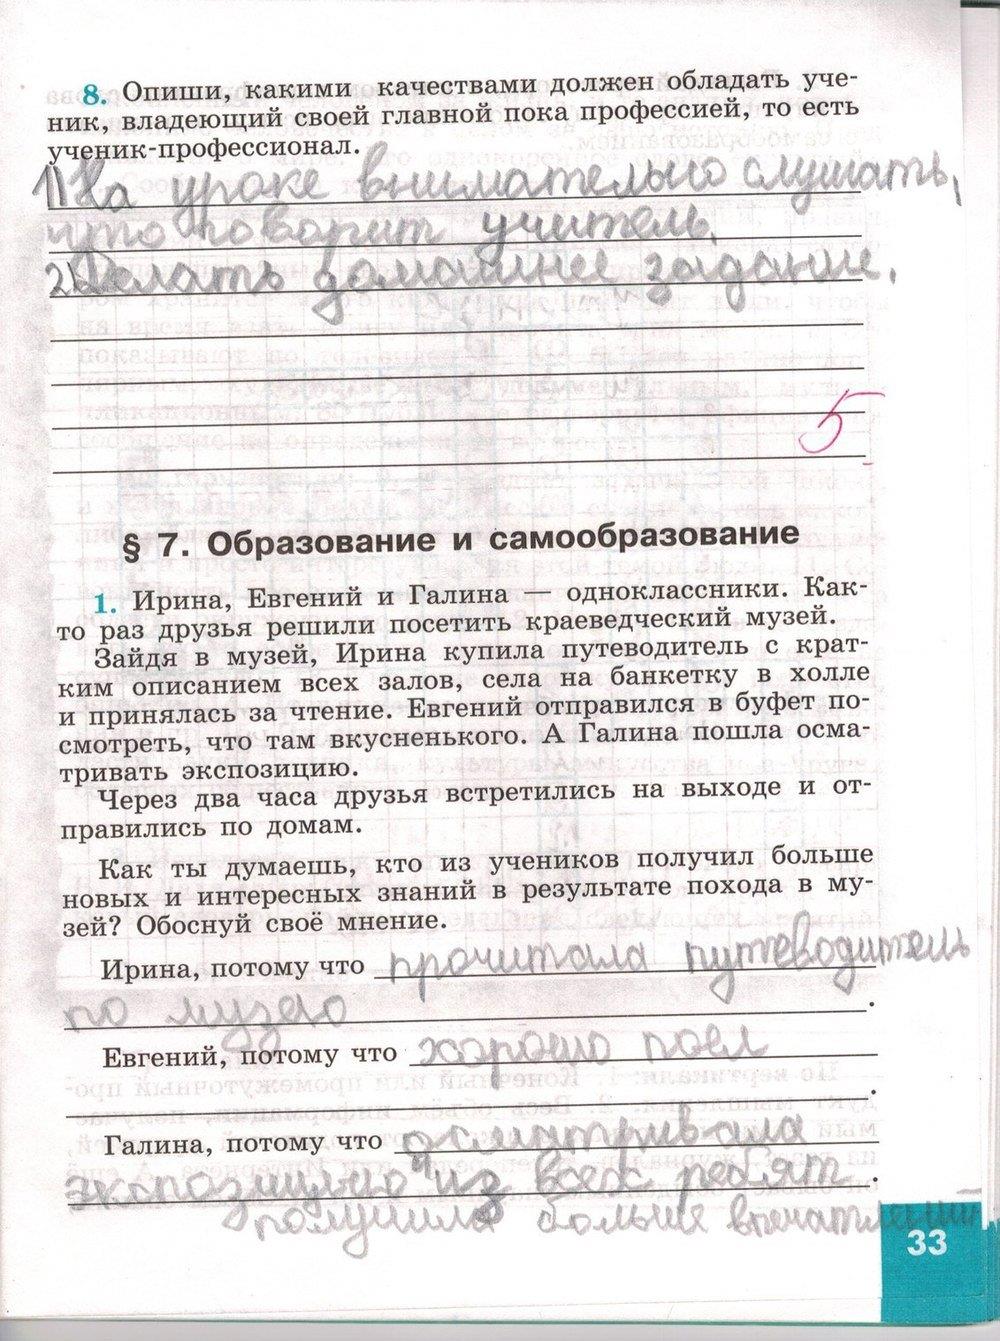 гдз 5 класс рабочая тетрадь страница 33 обществознание Иванова, Хотеенкова